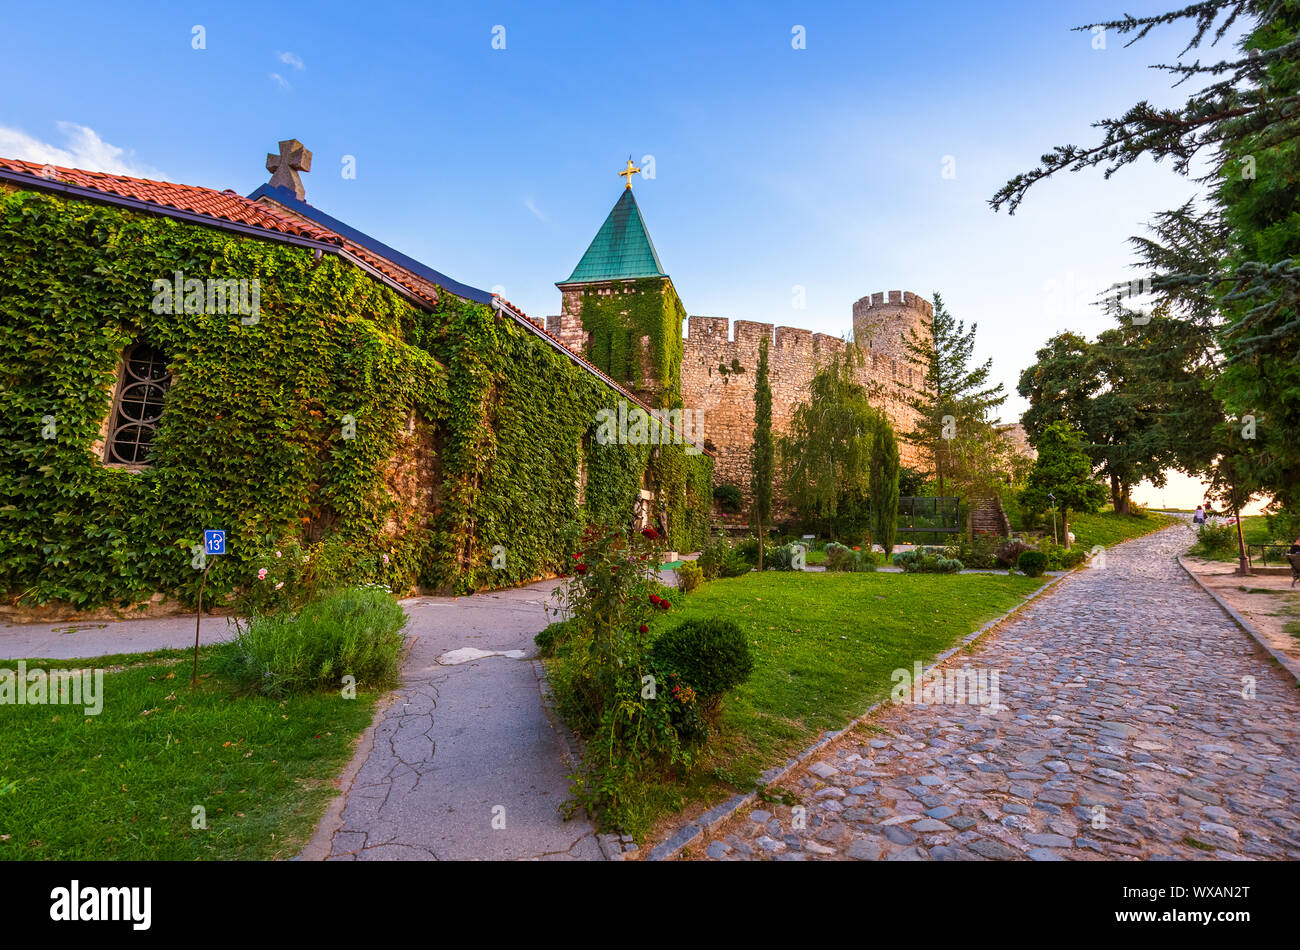 La forteresse de Kalemegdan Belgrade - Serbie Banque D'Images